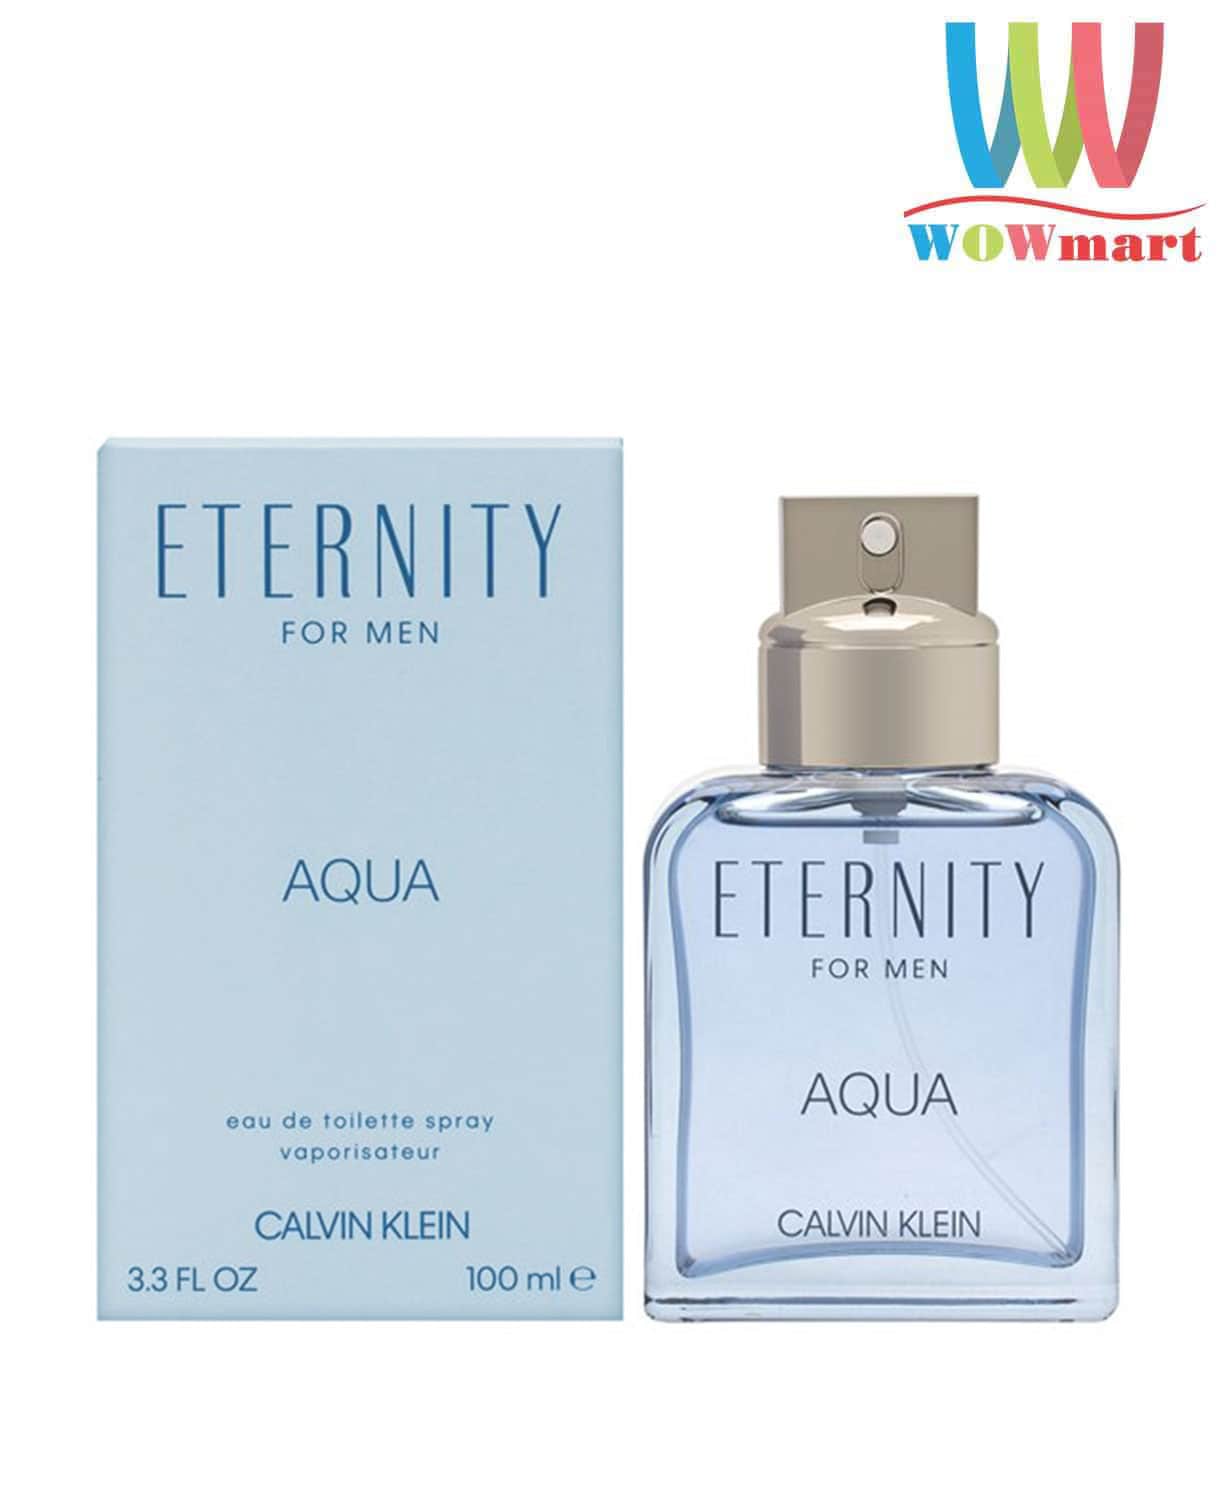 Nước hoa nam Calvin Klein Eternity For Men Aqua EDT 100ml – Wowmart VN |  100% hàng ngoại nhập